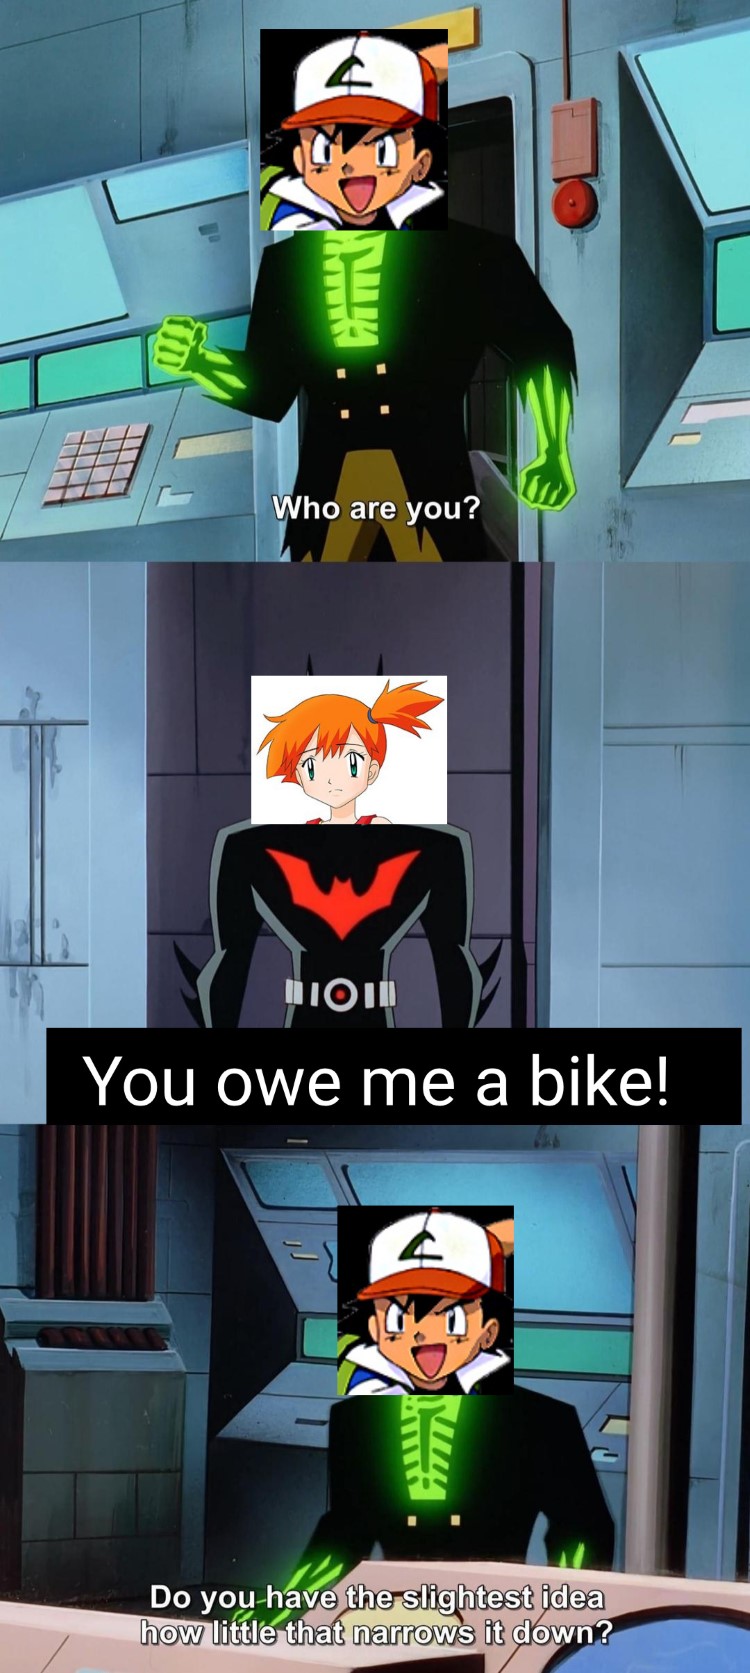 You owe me a bike!